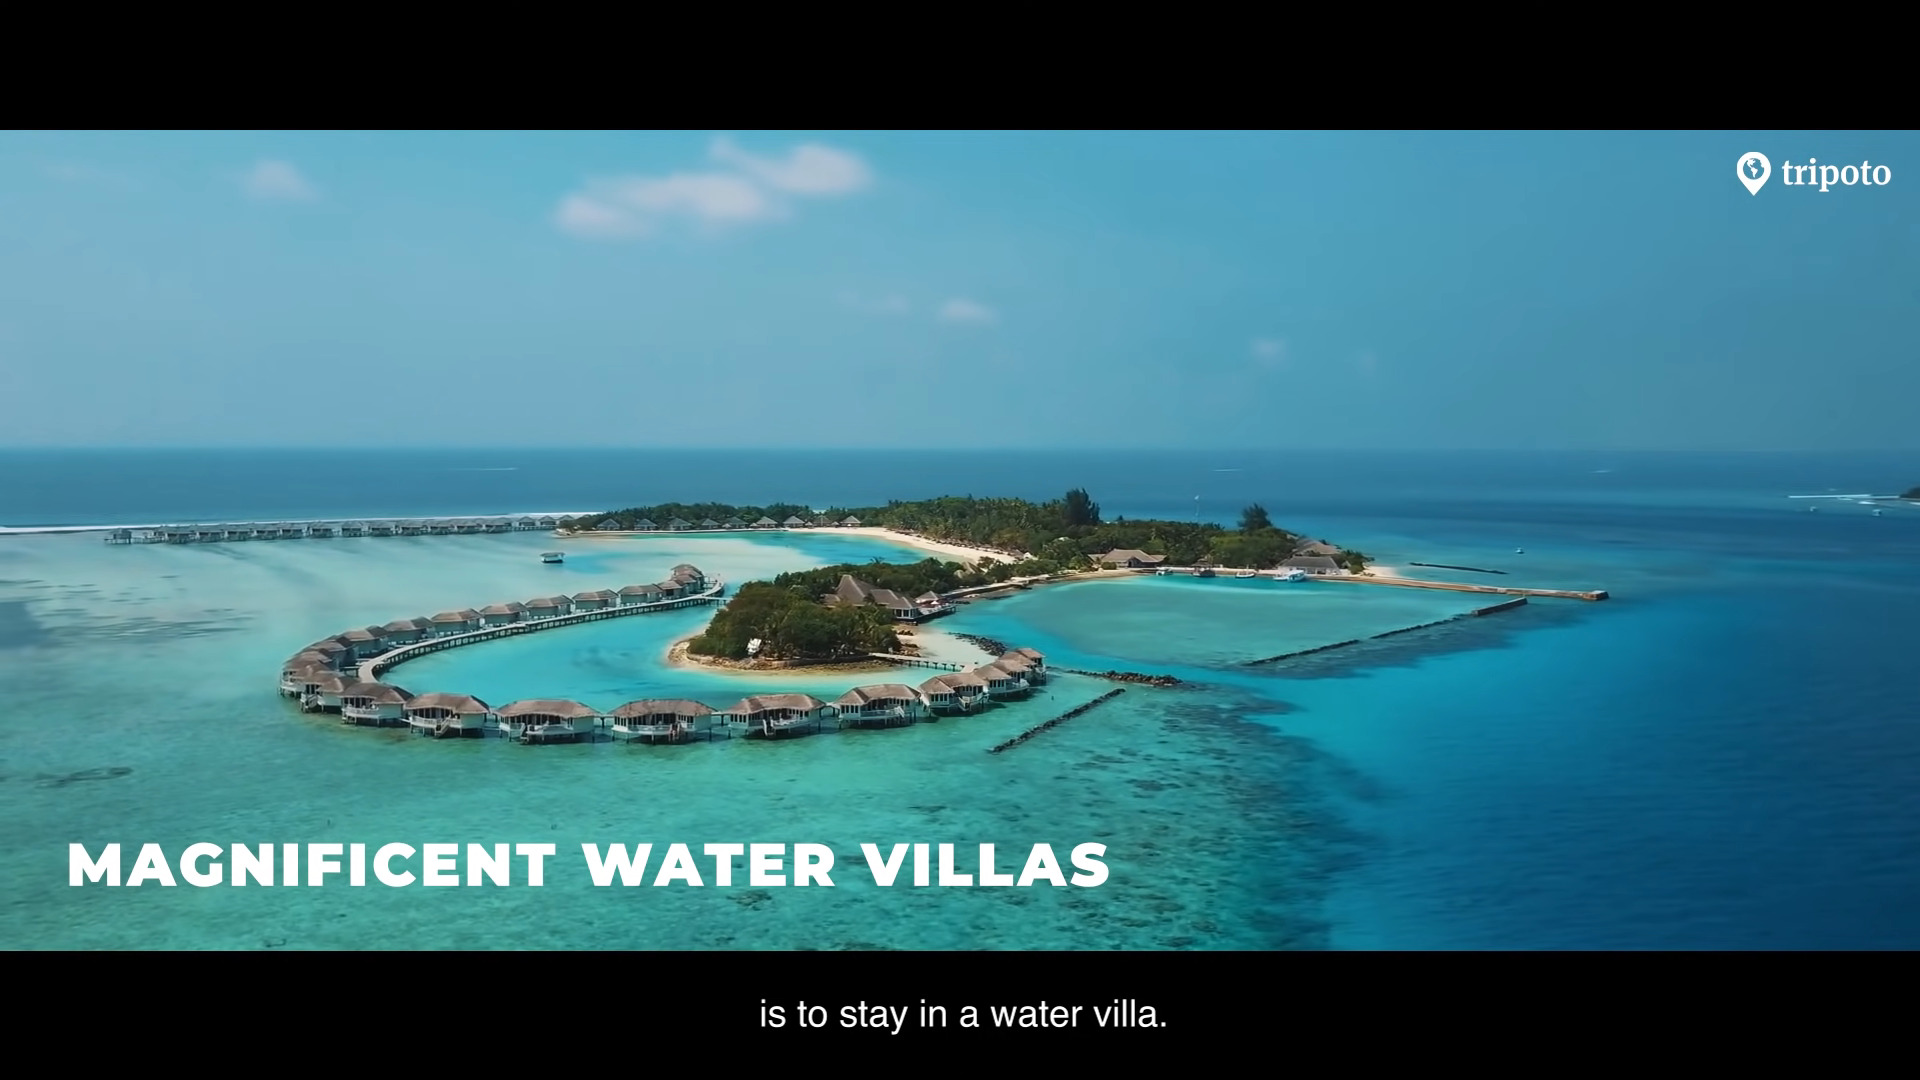 The ULTIMATE Guide To Maldives | Maldives Honeymoon | Maldives Resorts | Best Islands | Tripoto